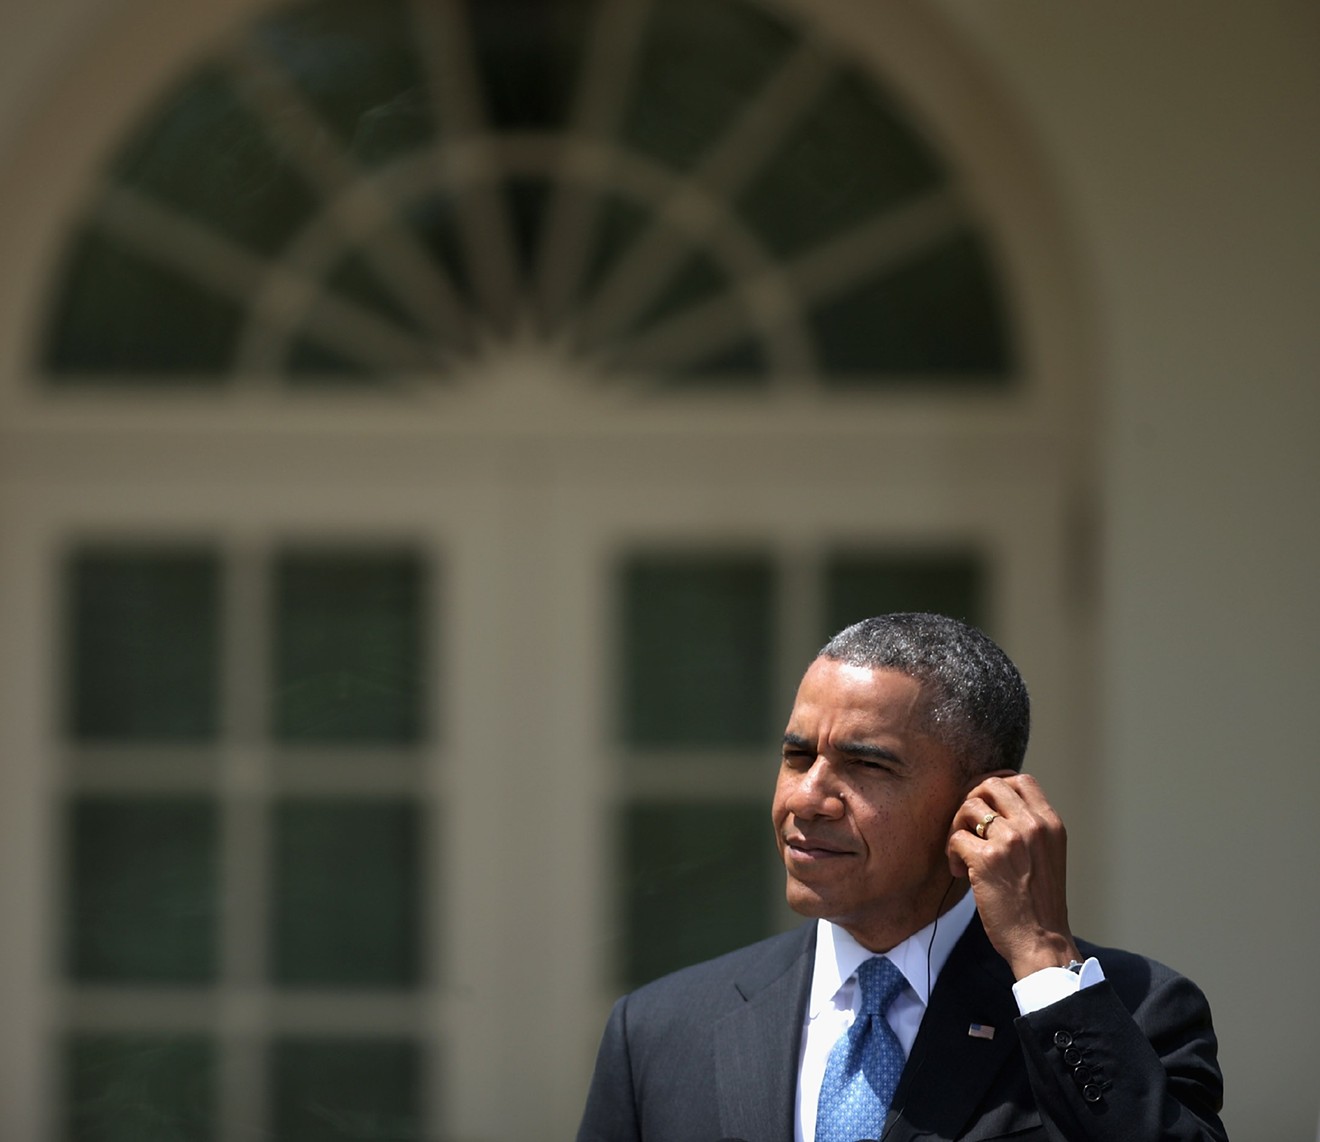 Former President Barack Obama pictured either talking to secret service or jamming some Leon Bridges.